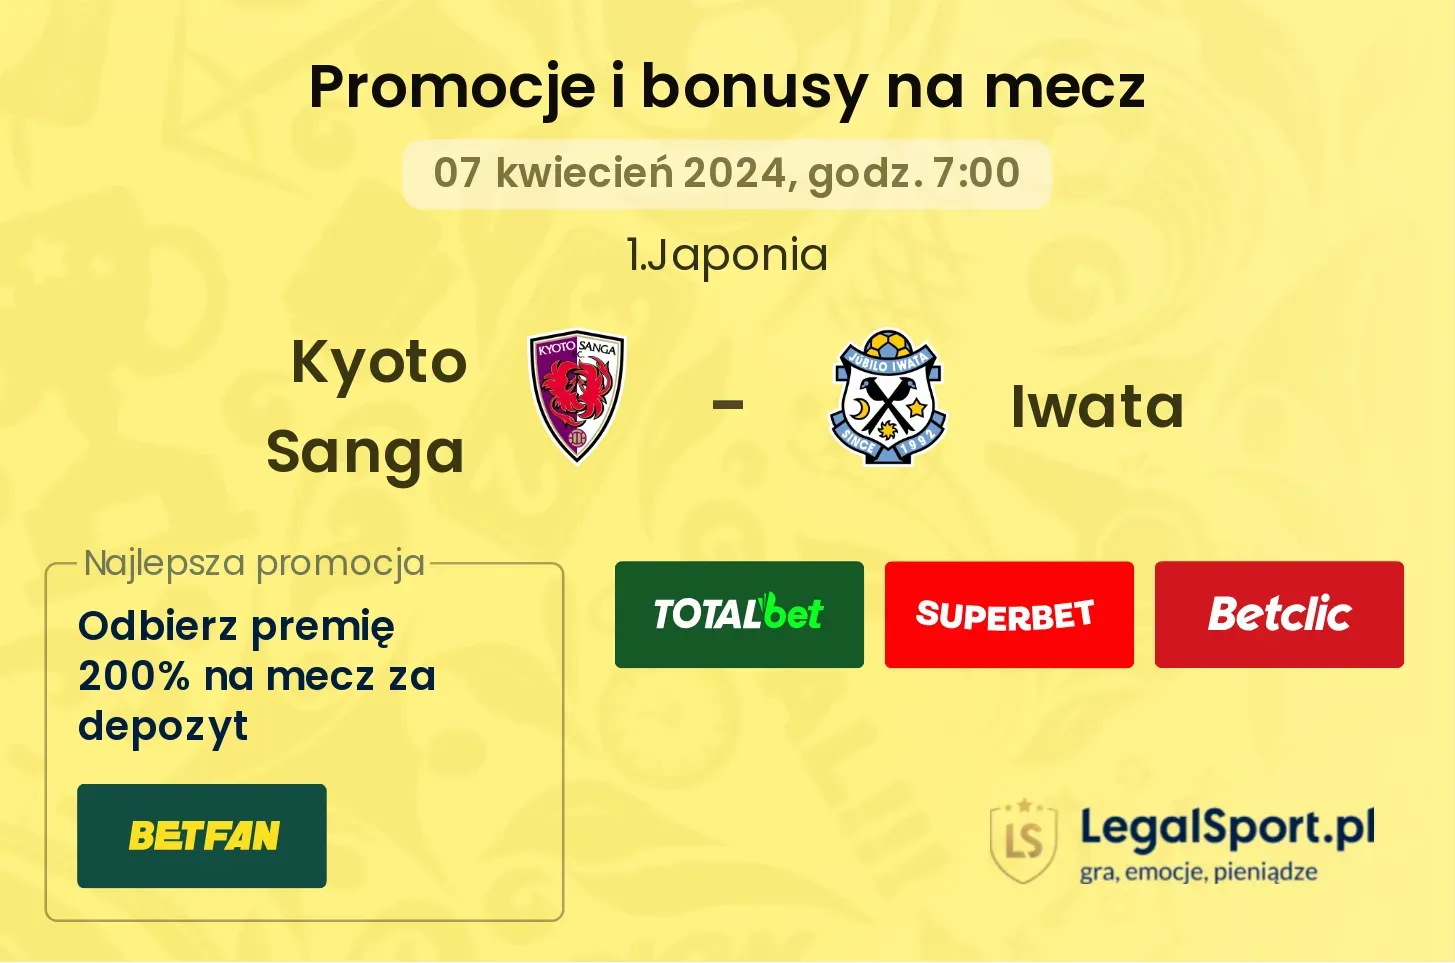 Kyoto Sanga - Iwata promocje bonusy na mecz